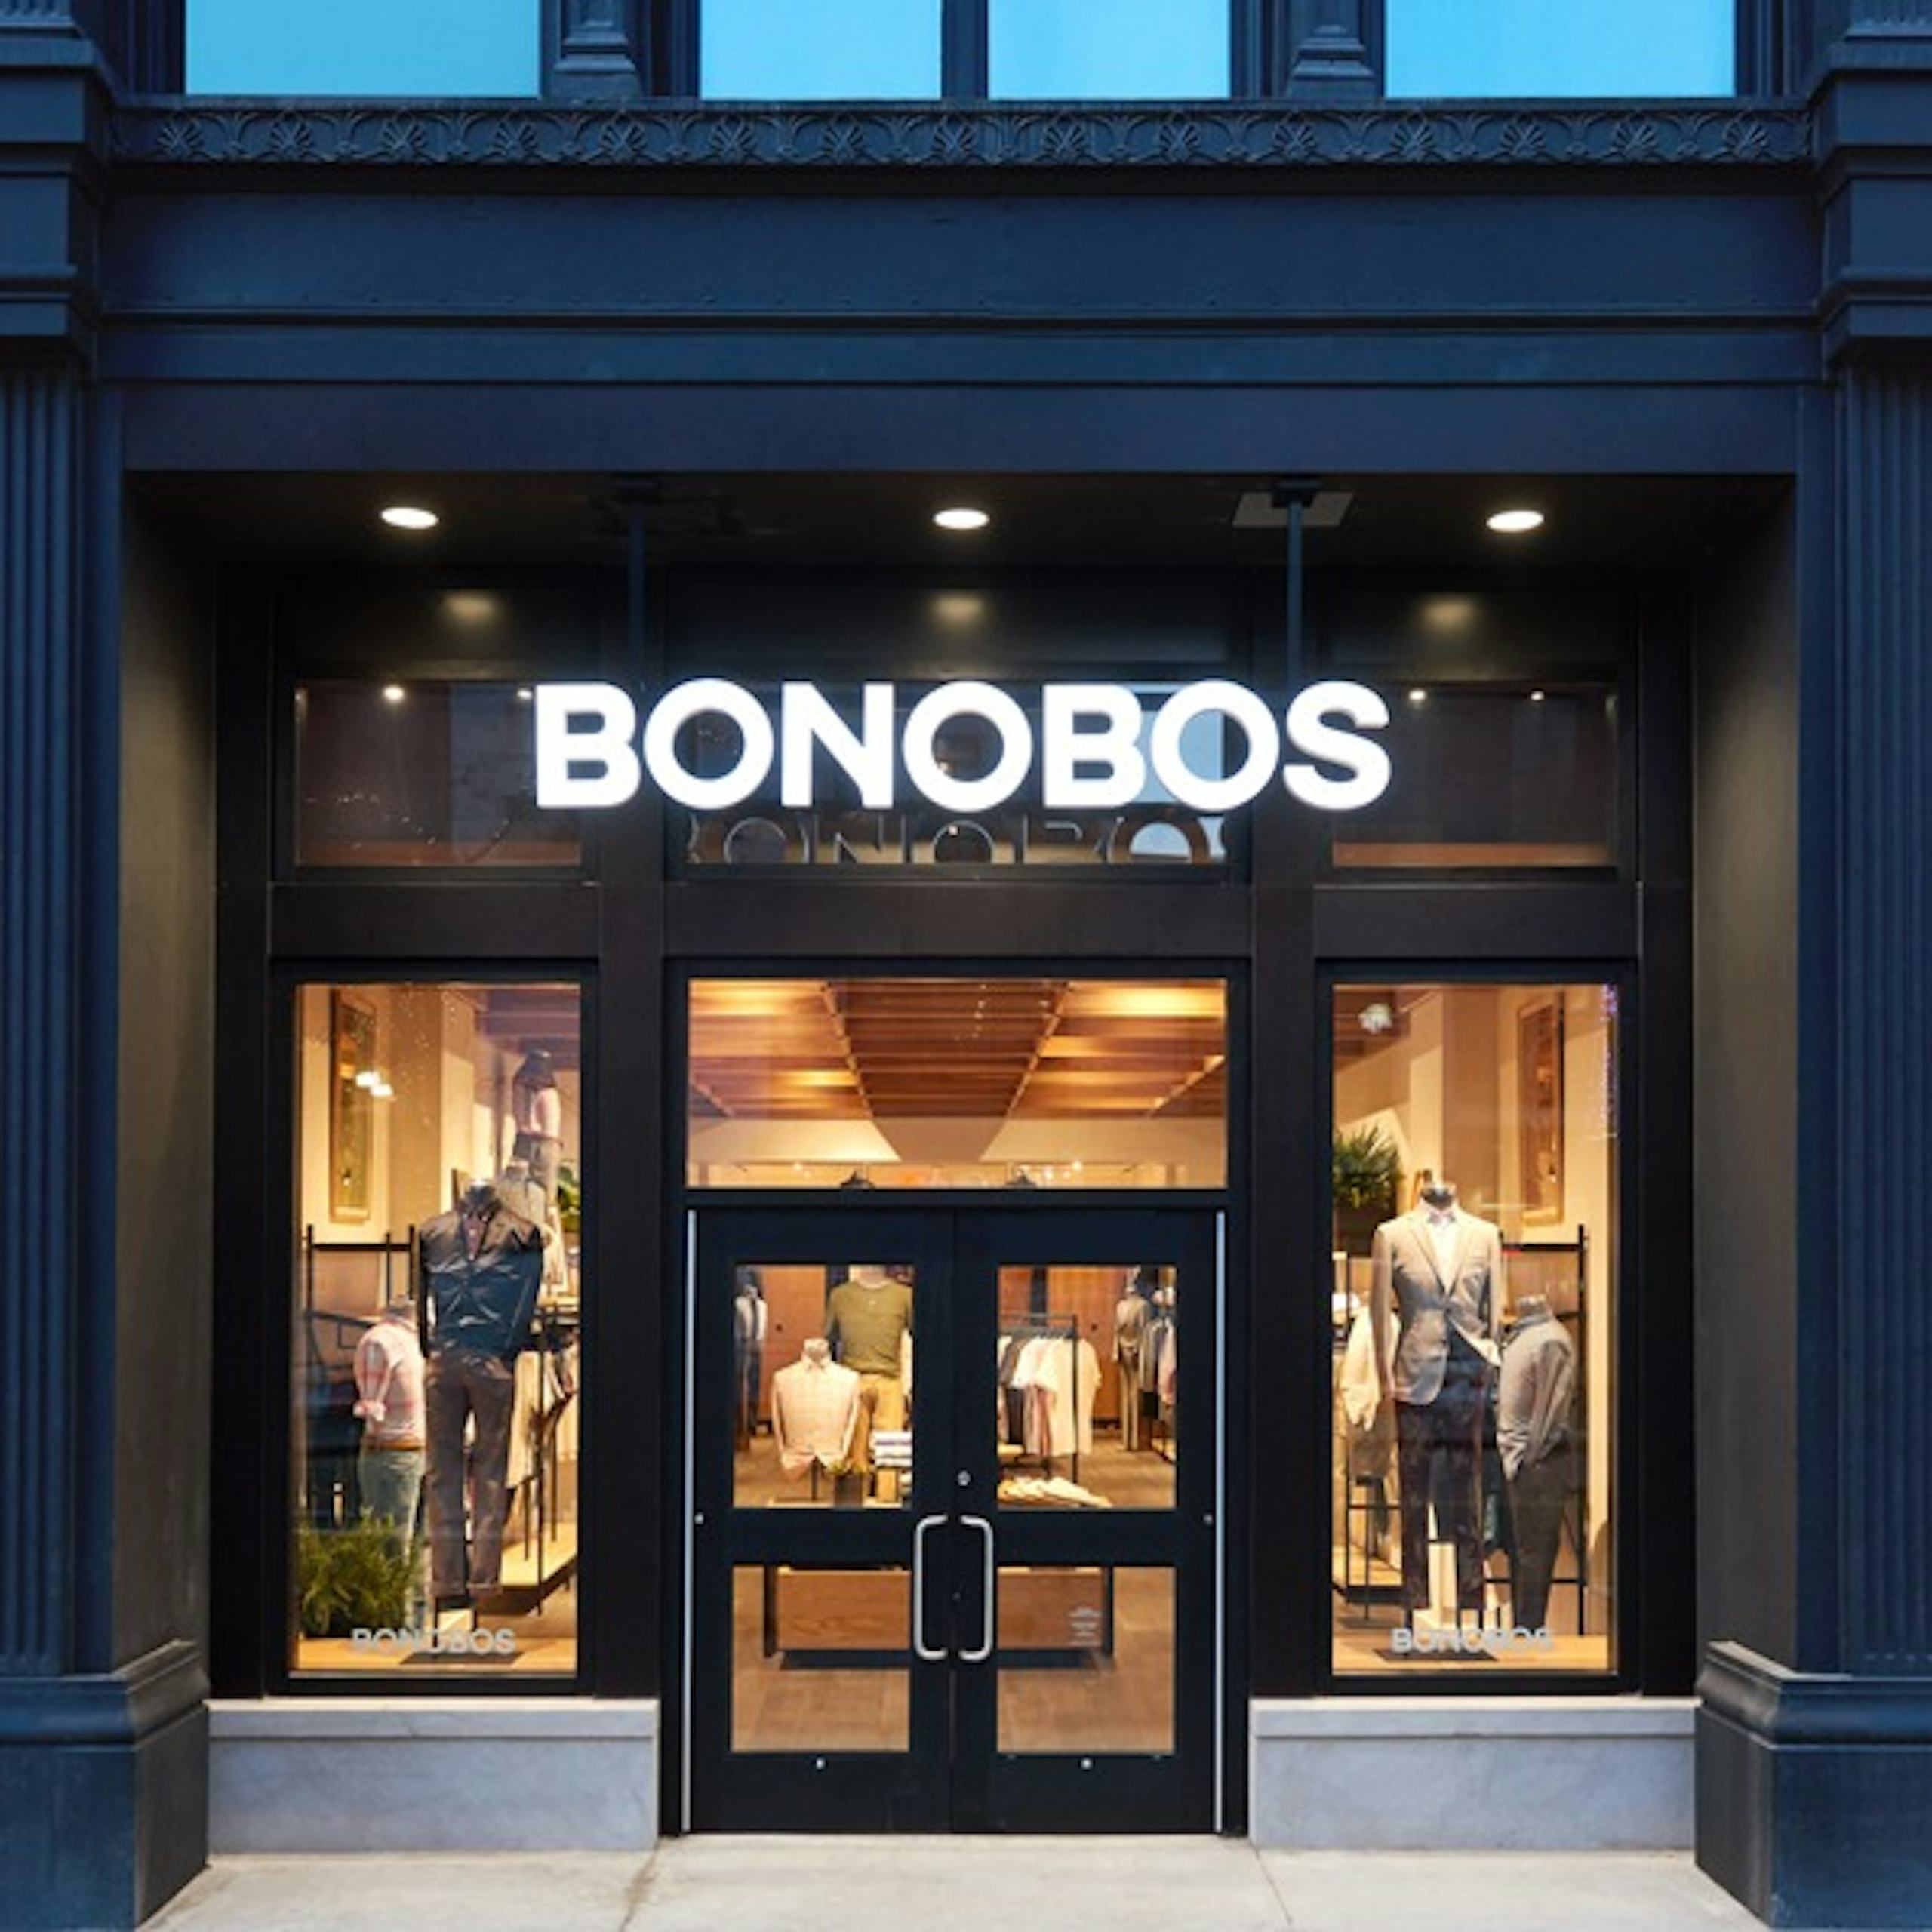 Image of Woodward Ave, Detroit Bonobos Store displaying casual shirts, chinos, and menswear.